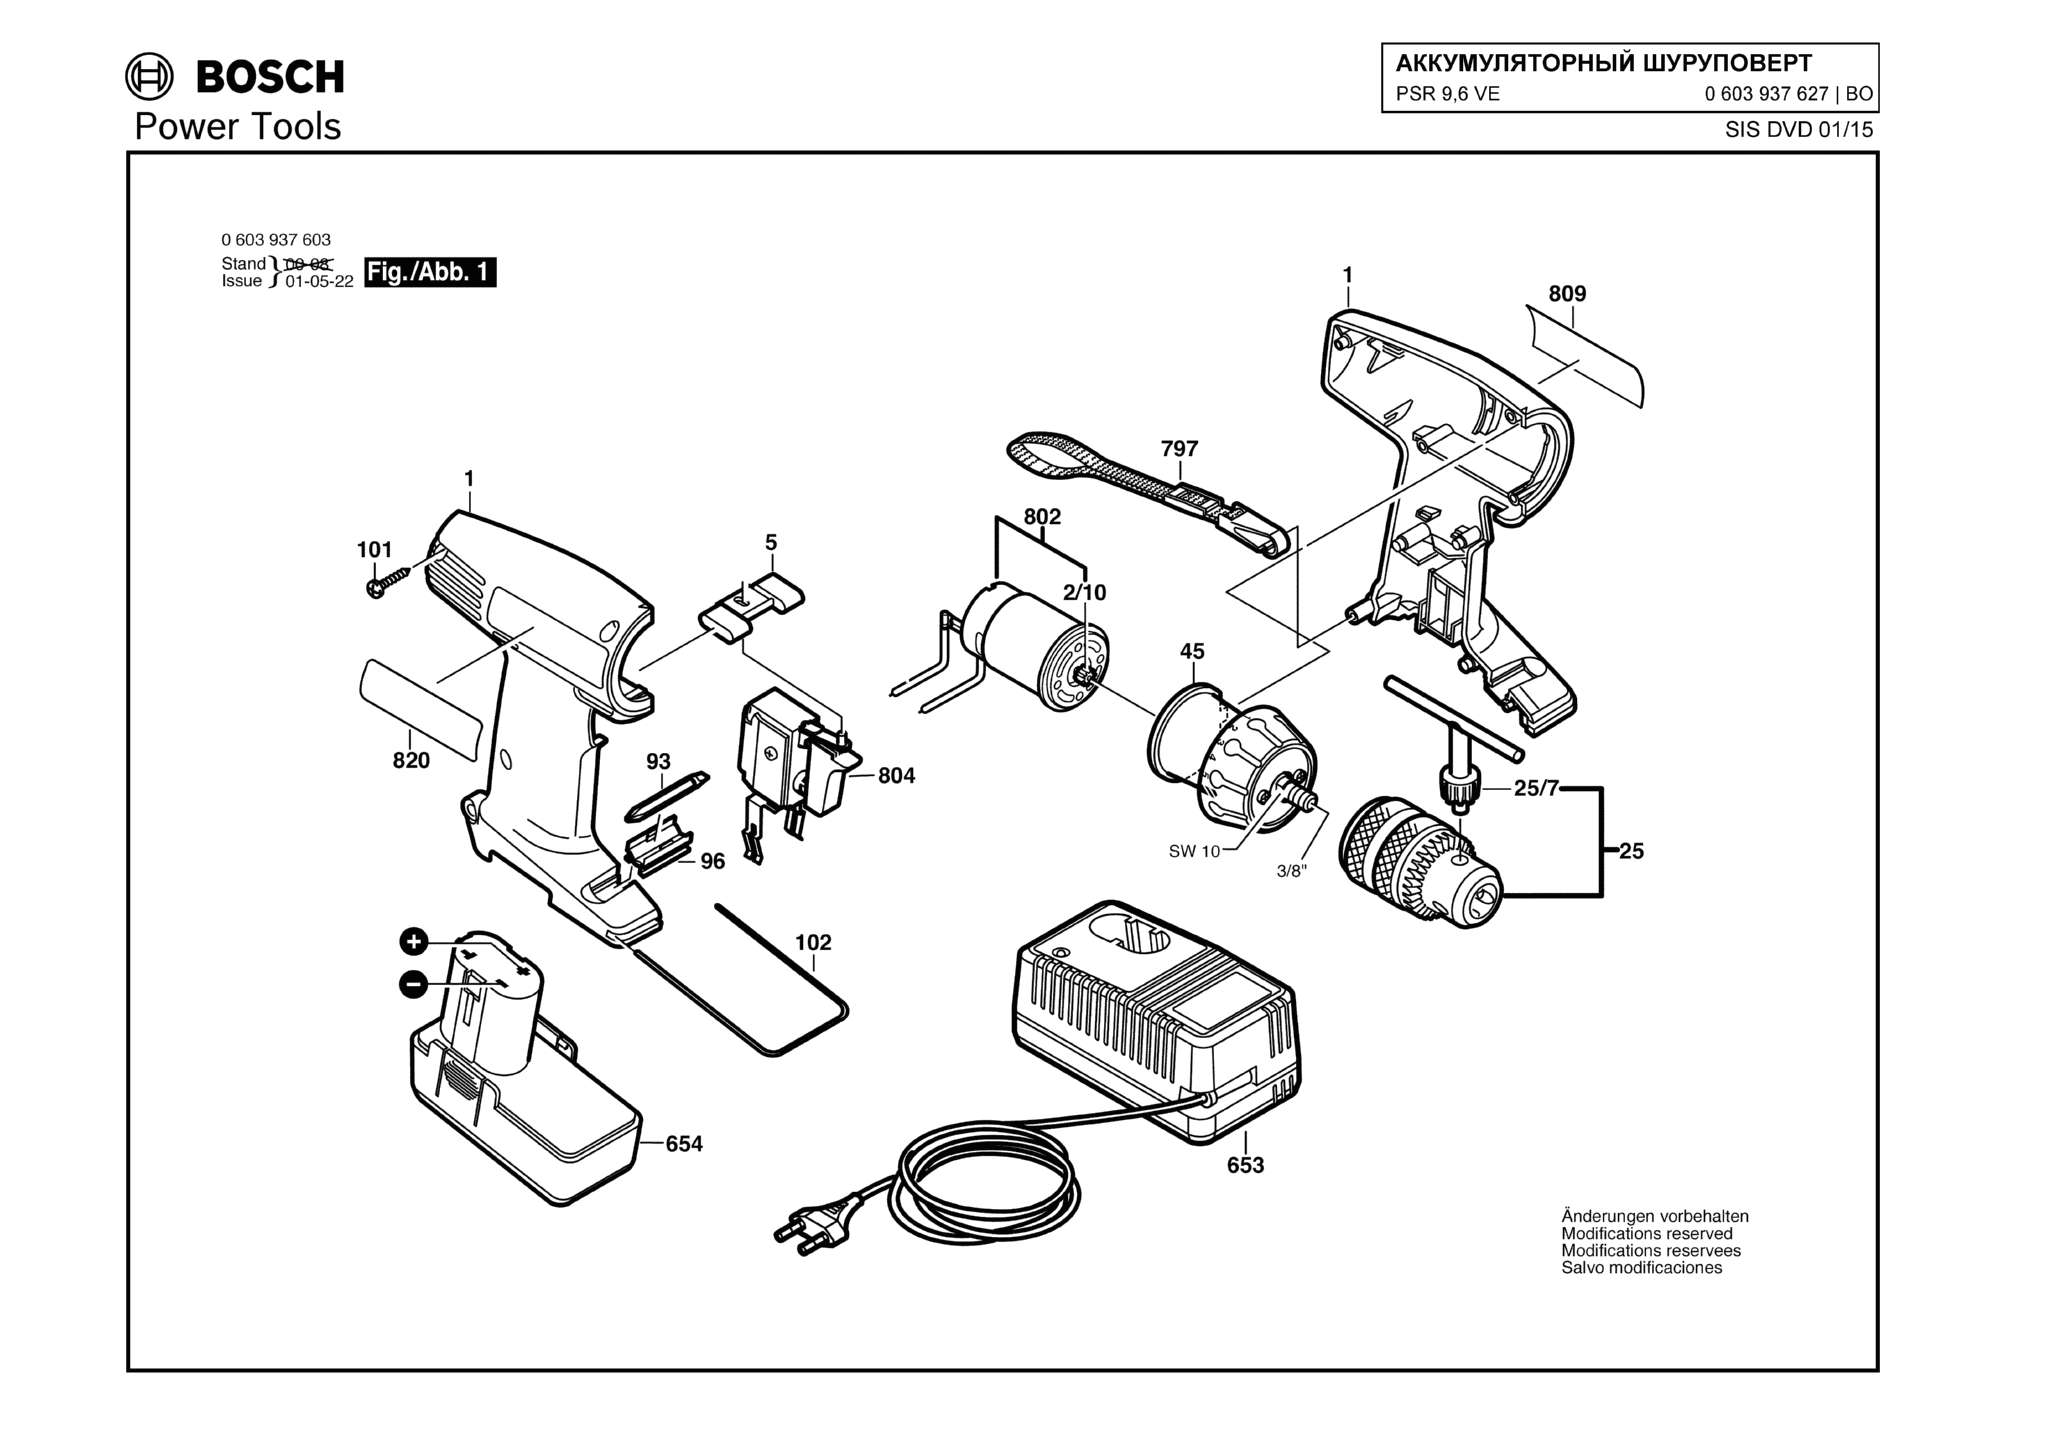 Запчасти, схема и деталировка Bosch PSR 9,6 VE (ТИП 0603937627)